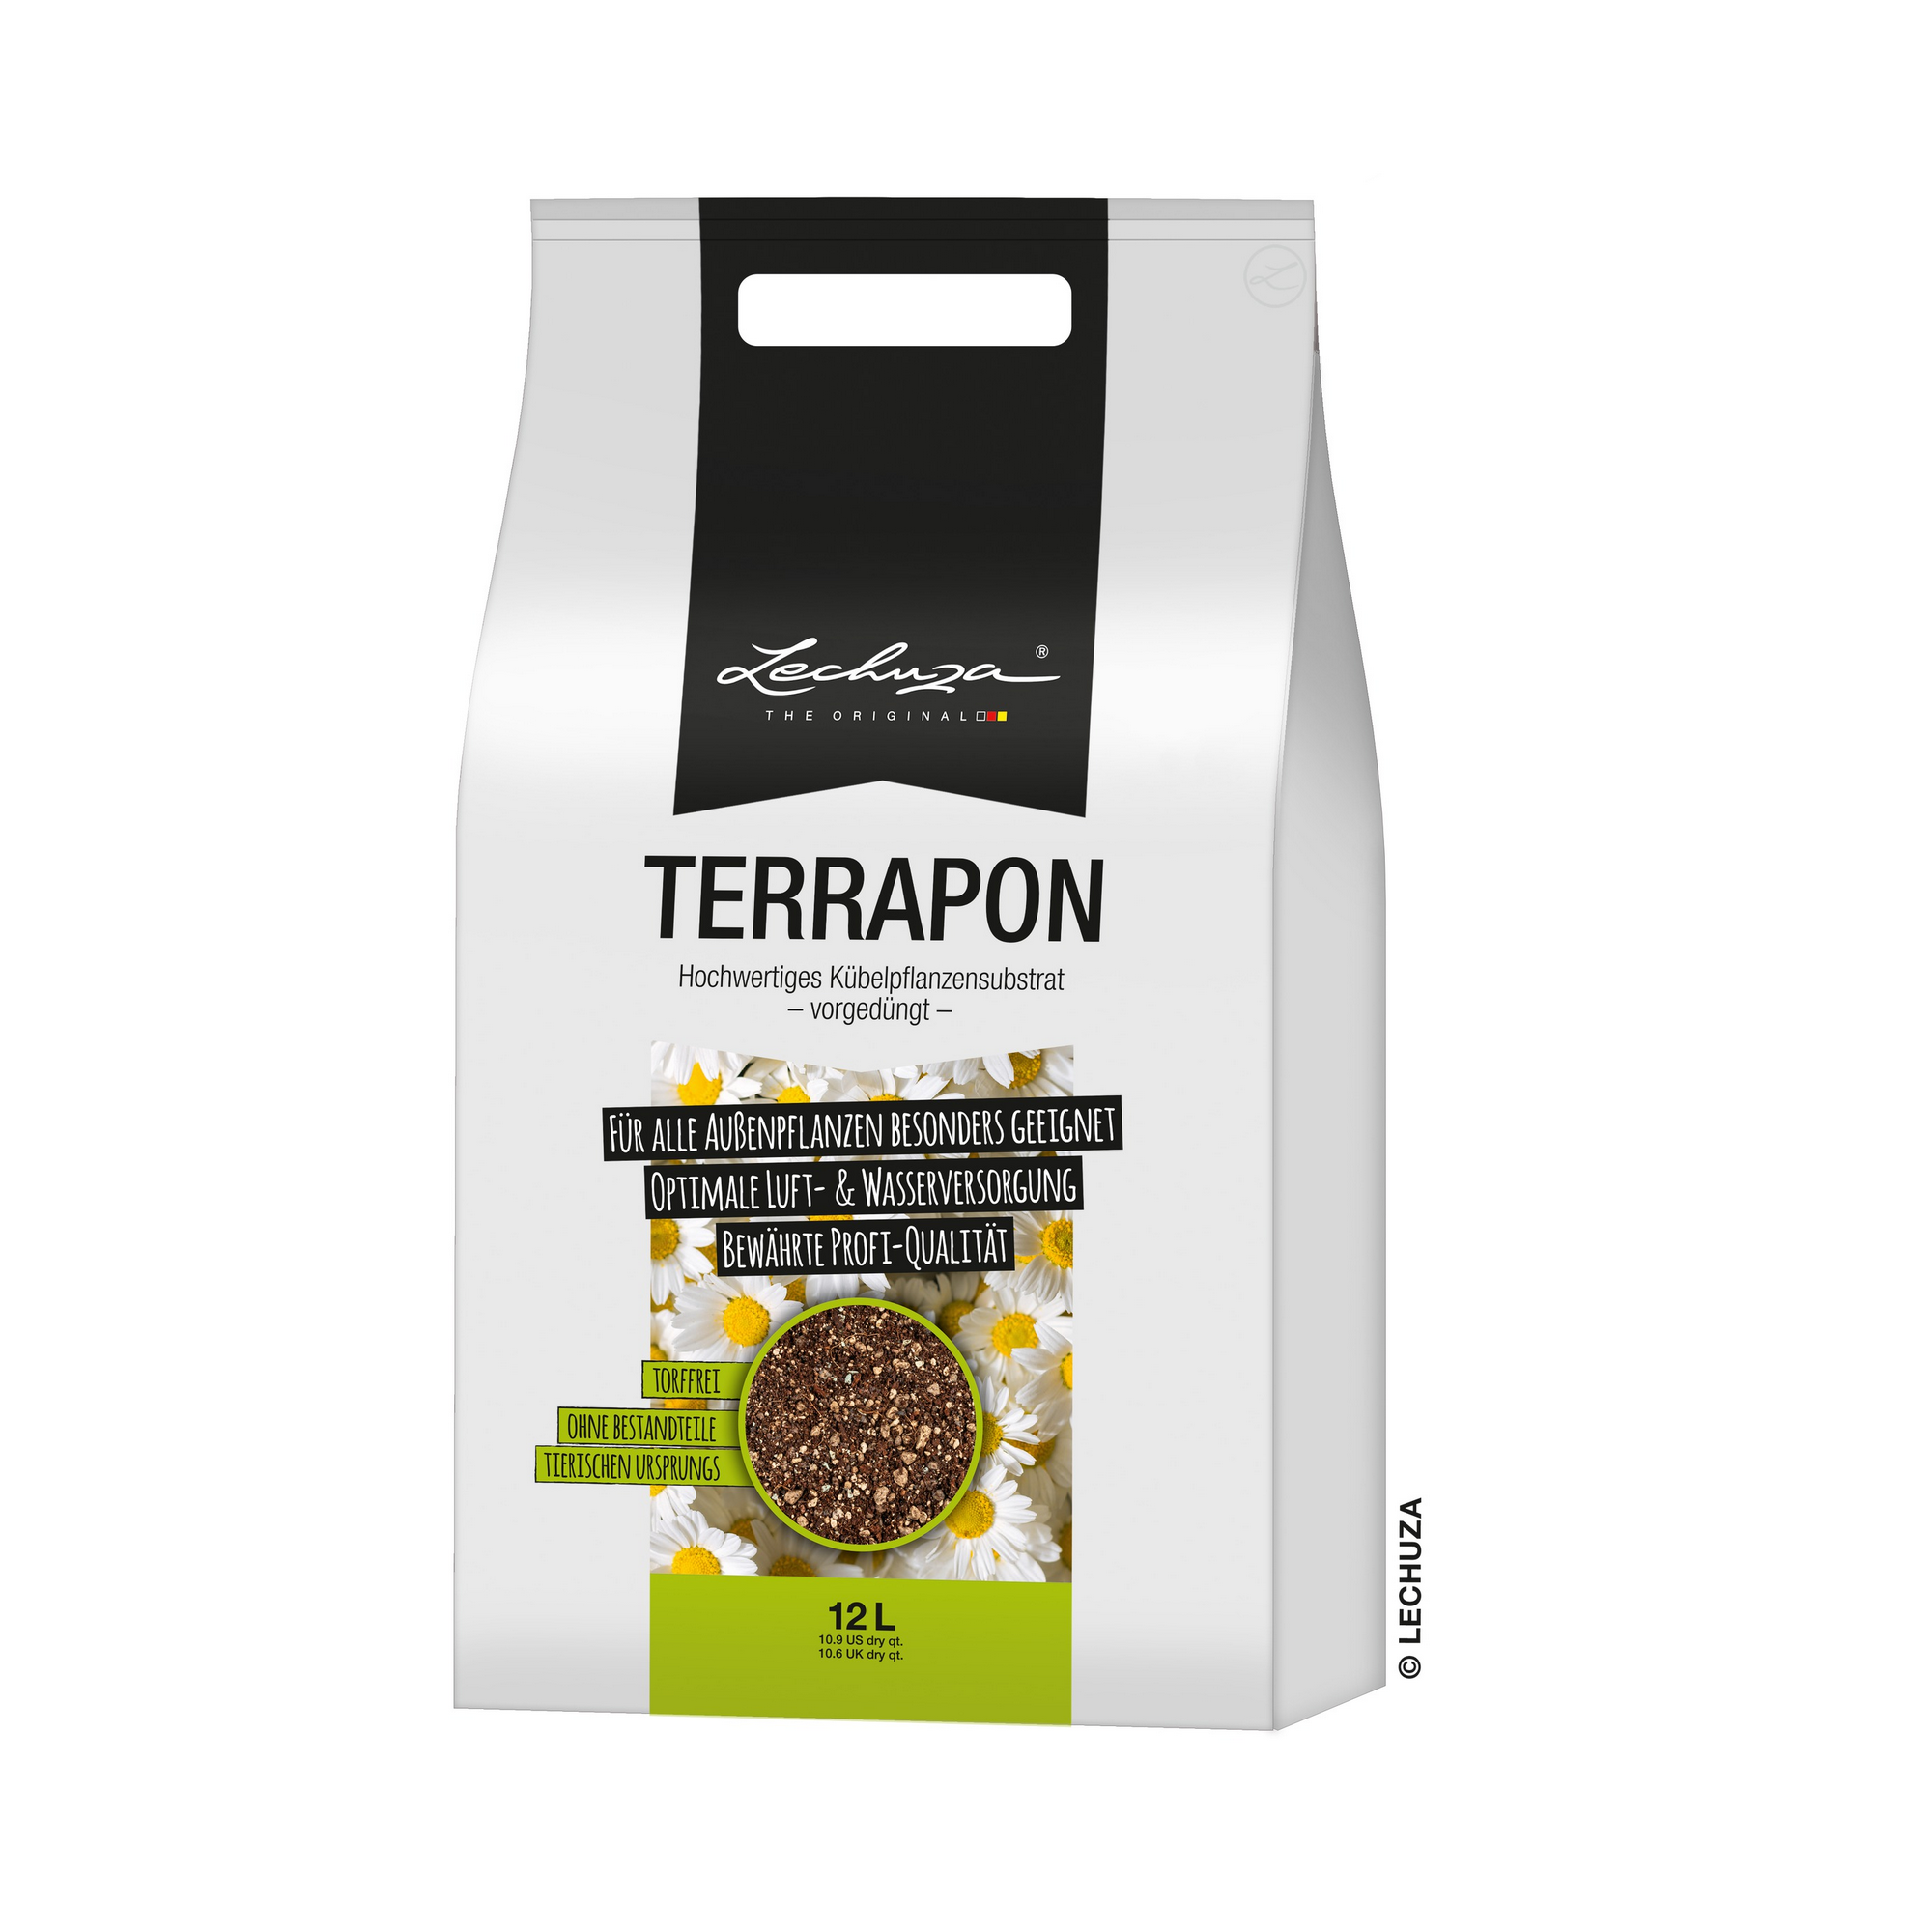 Pflanzenerde 'Terrapon' 12 Liter + product picture